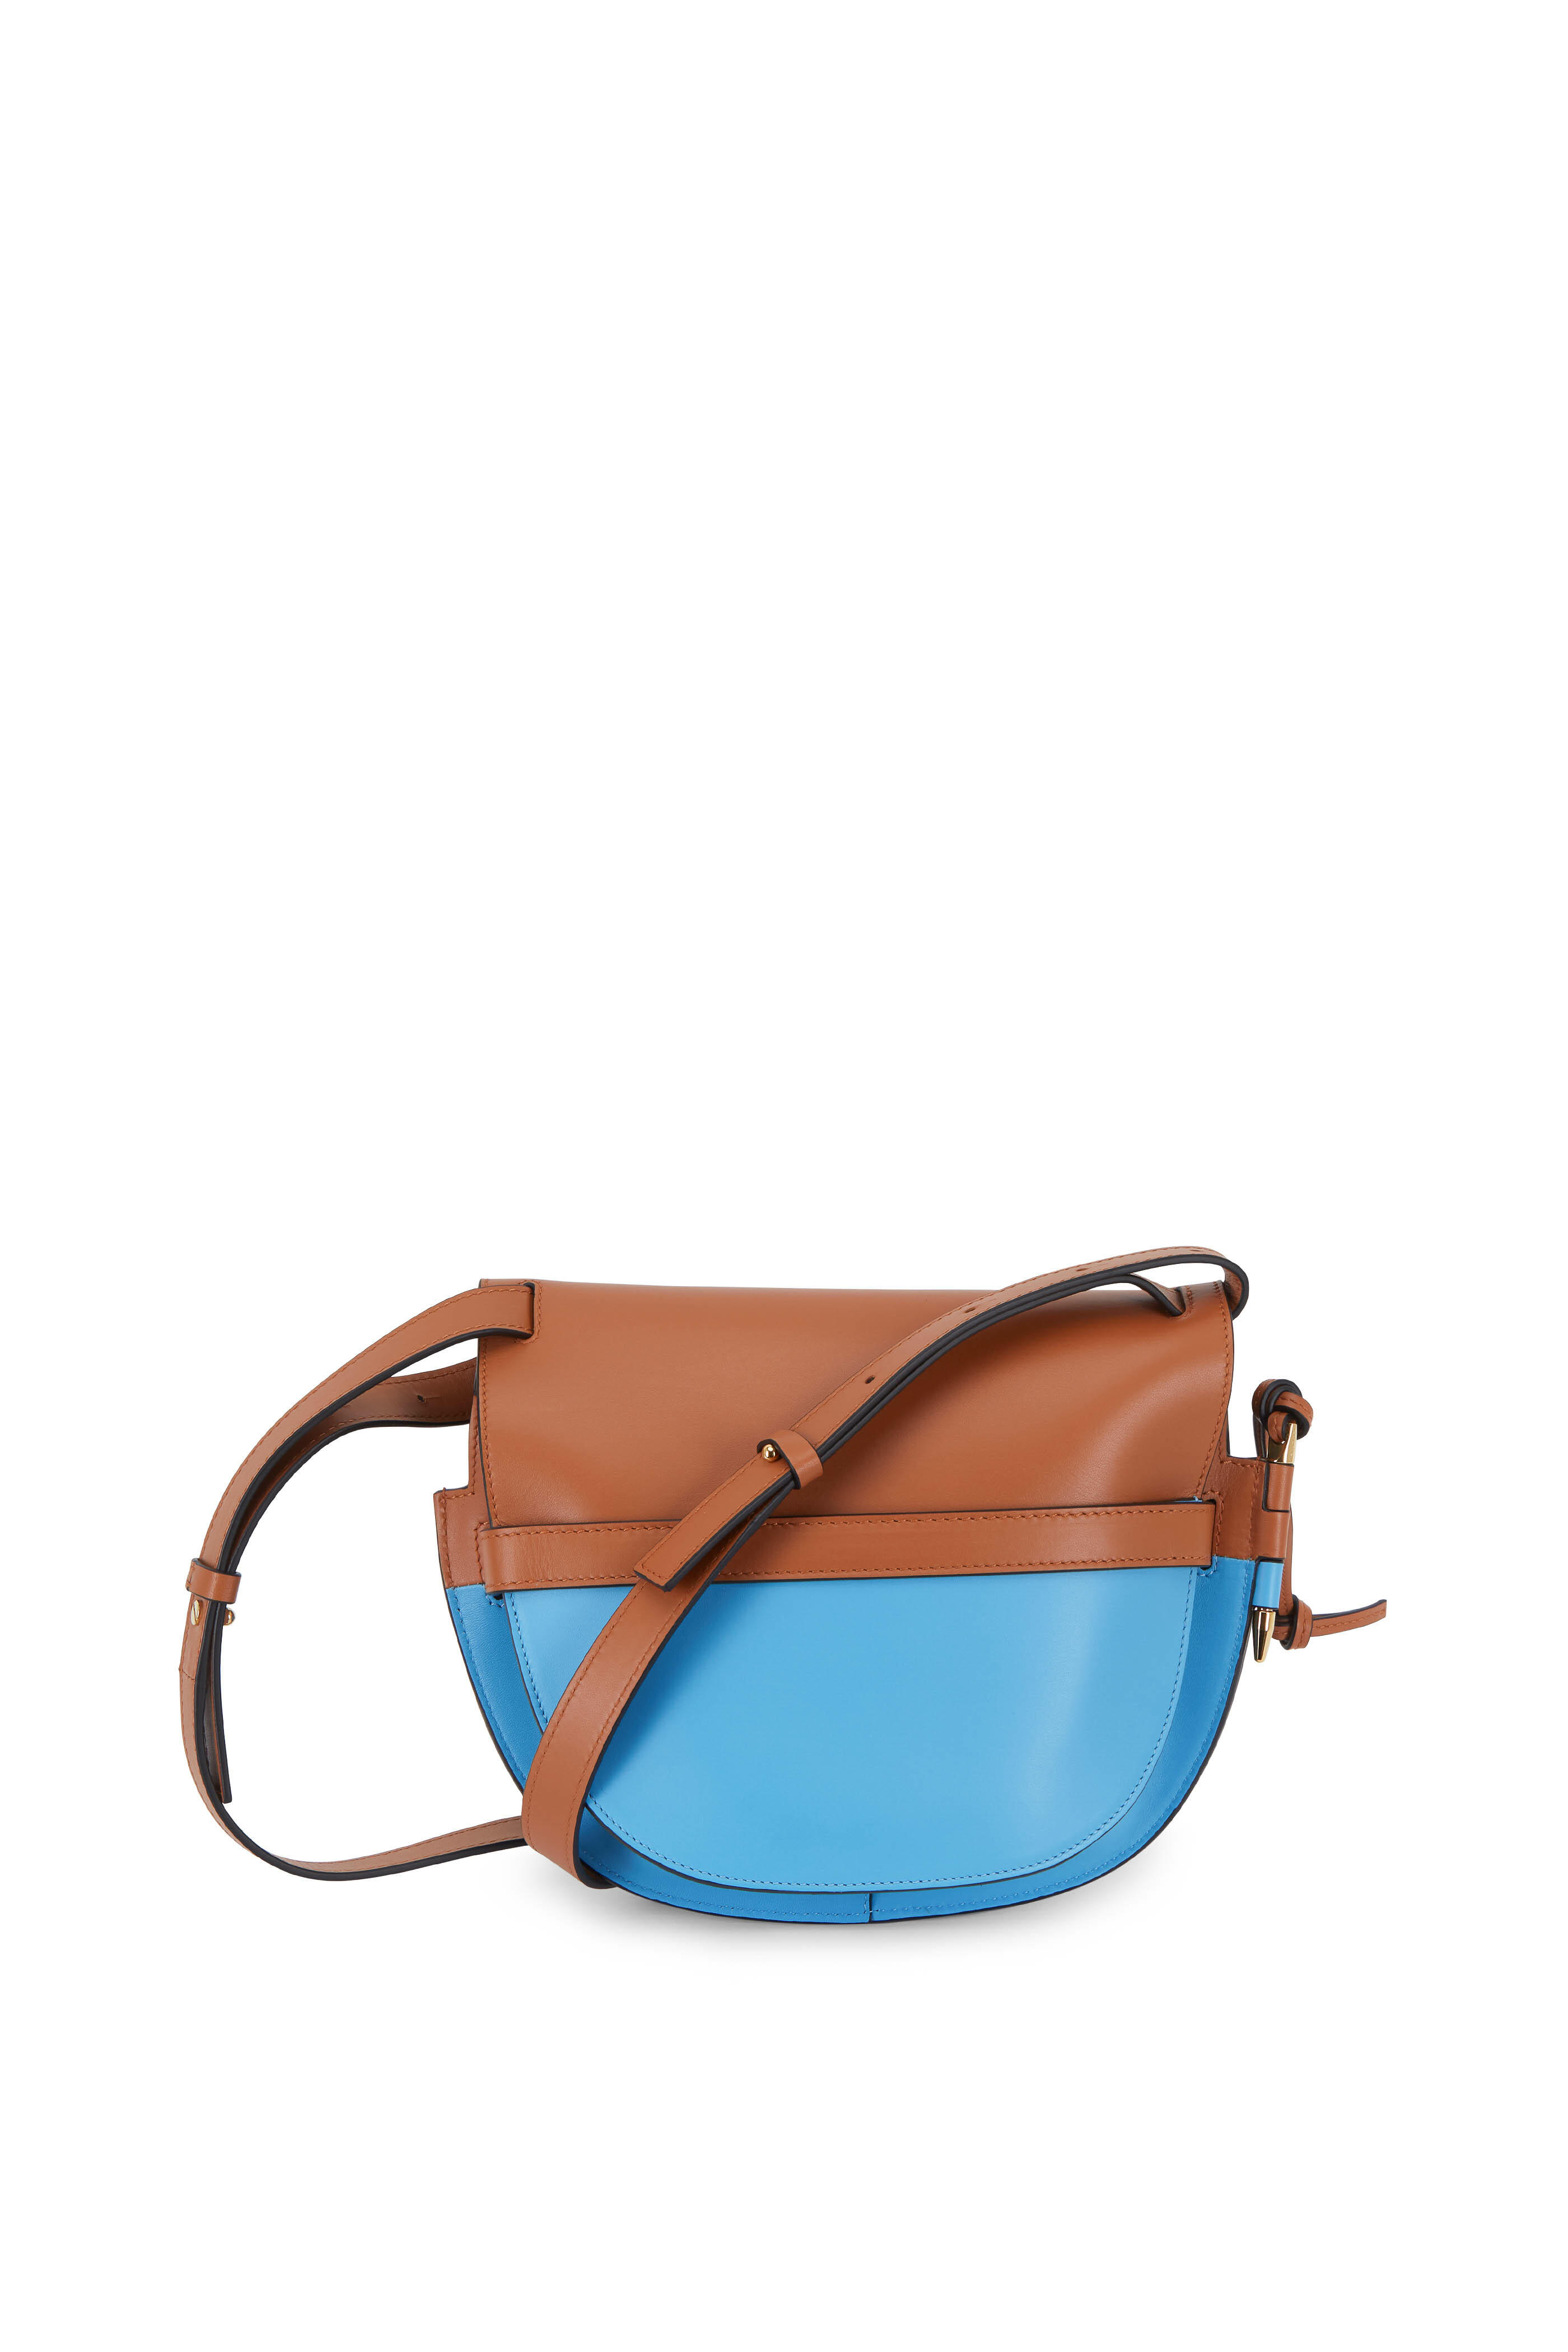 Loewe Gate Small Bag in Tan & Sky Blue